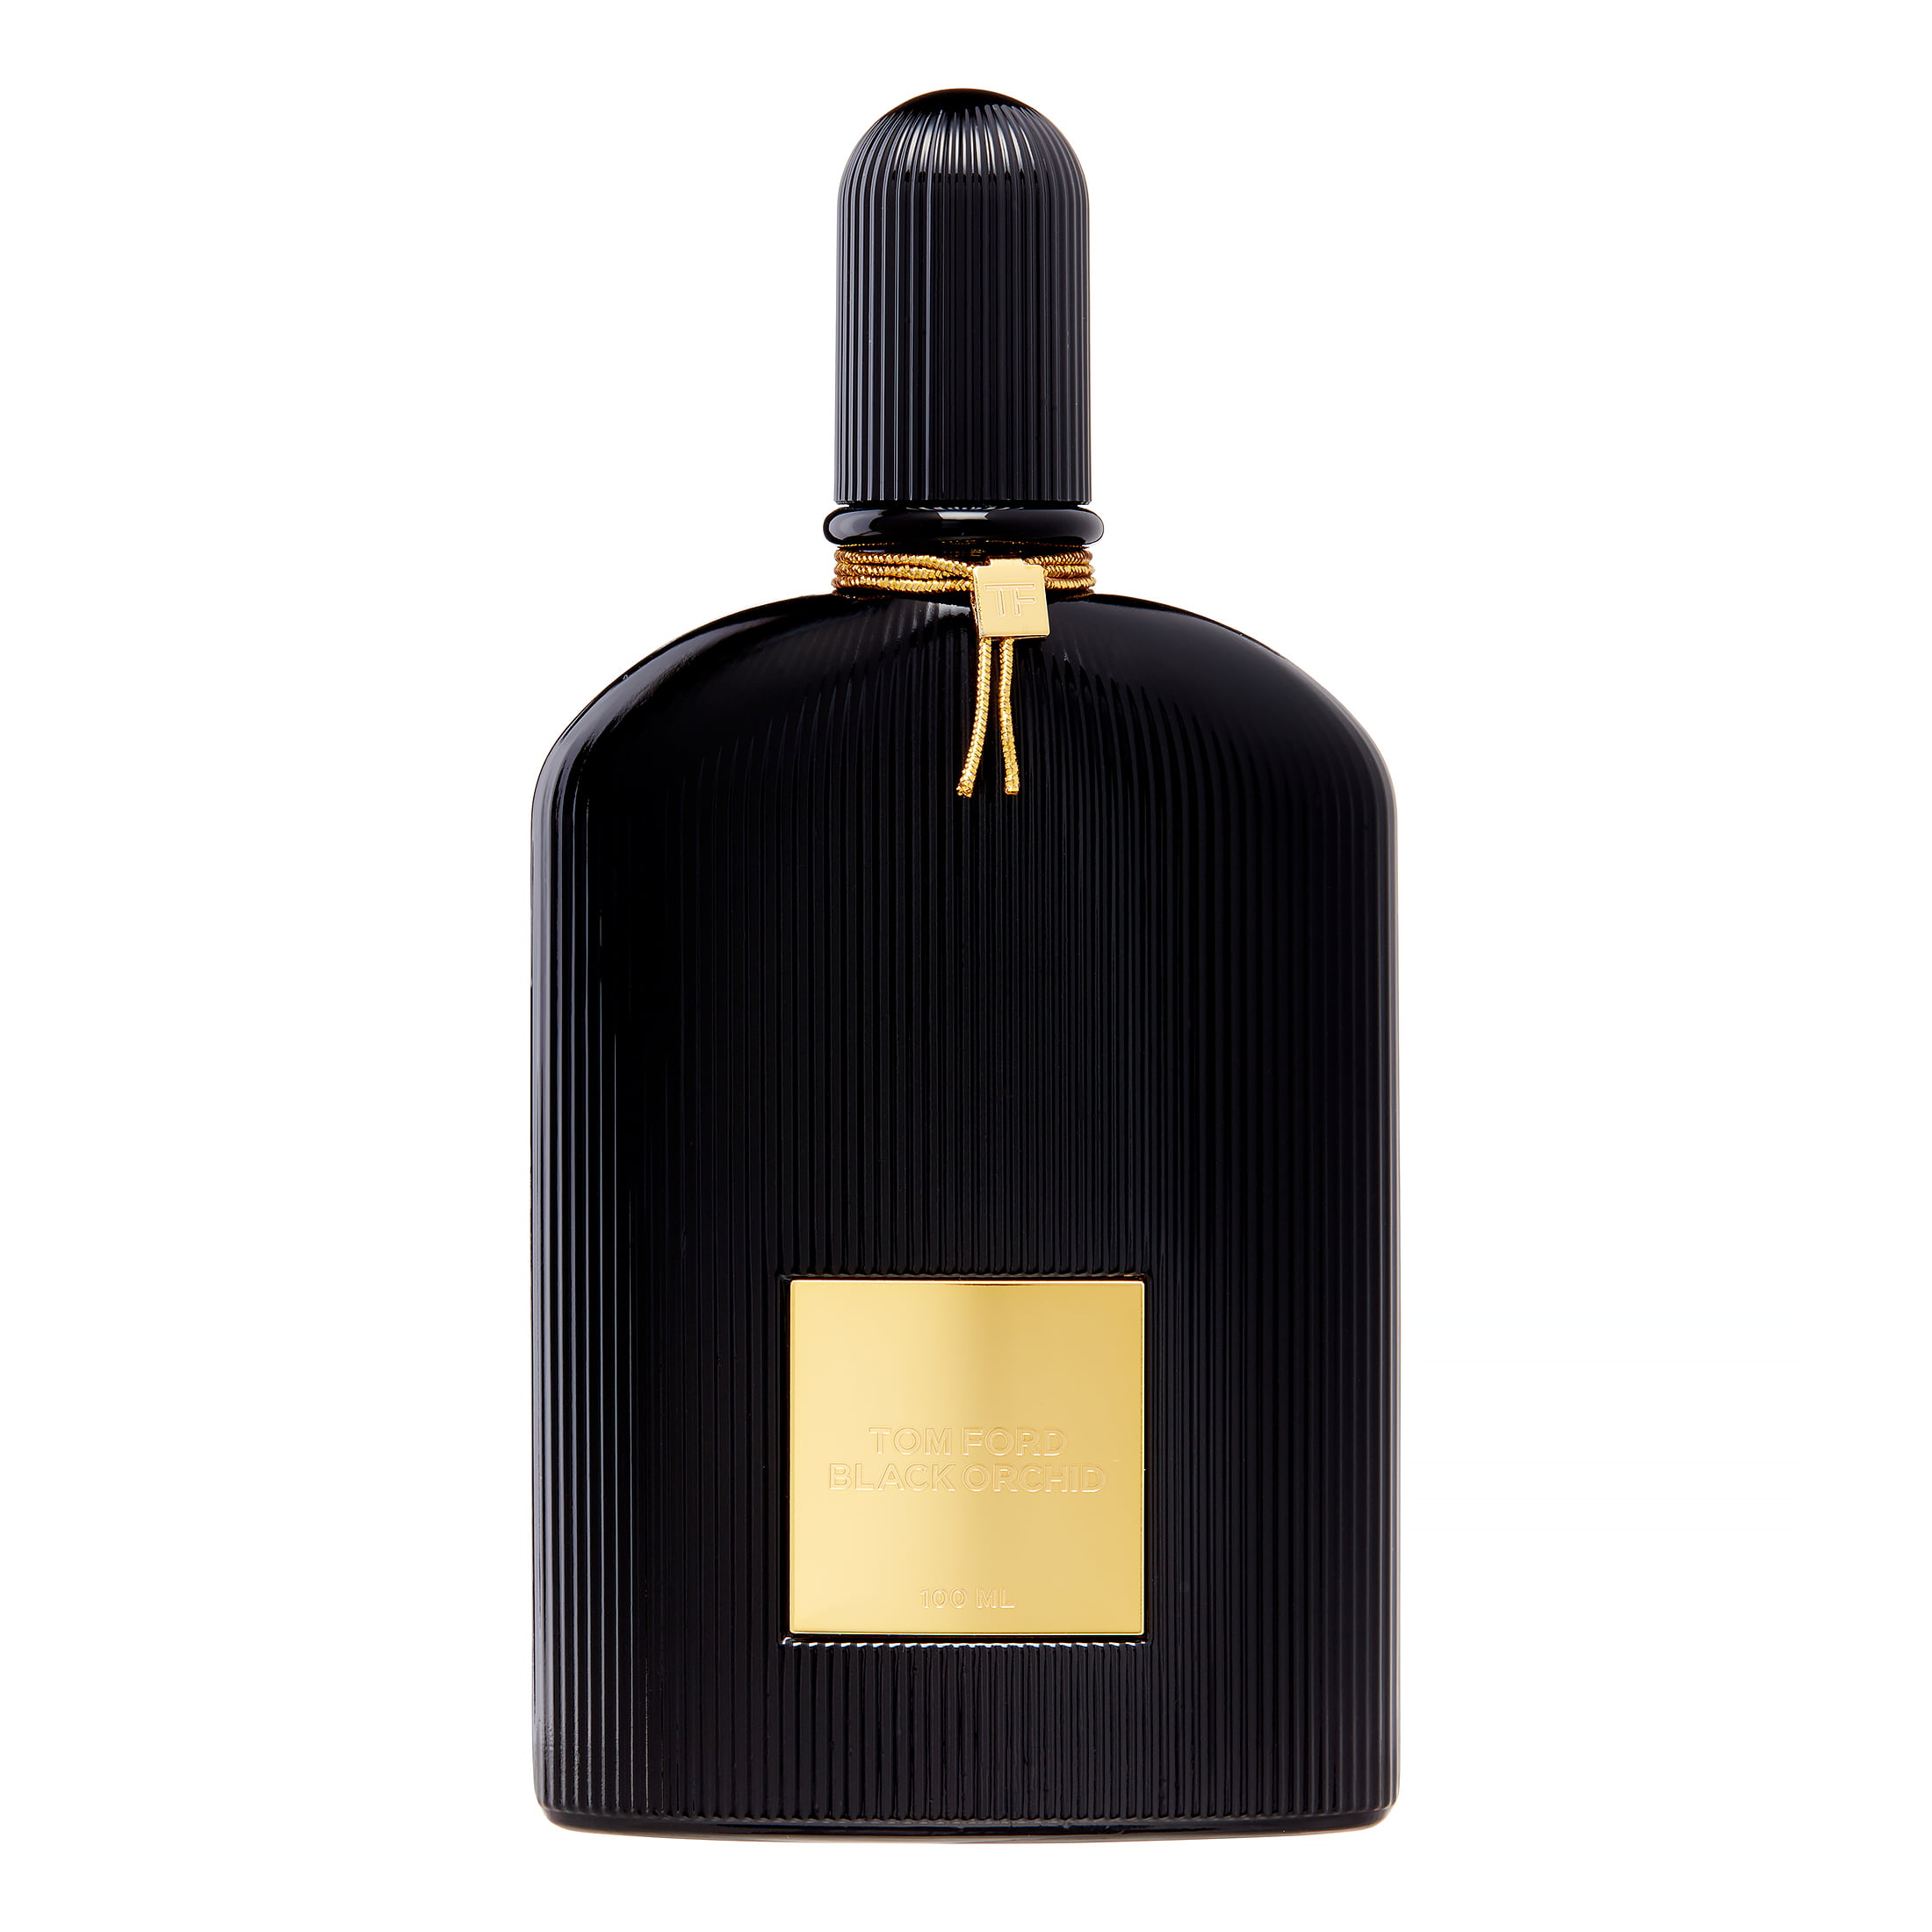 Tom Ford - Tom Ford Black Orchid Eau de Parfum, Perfume for Women, 3.4